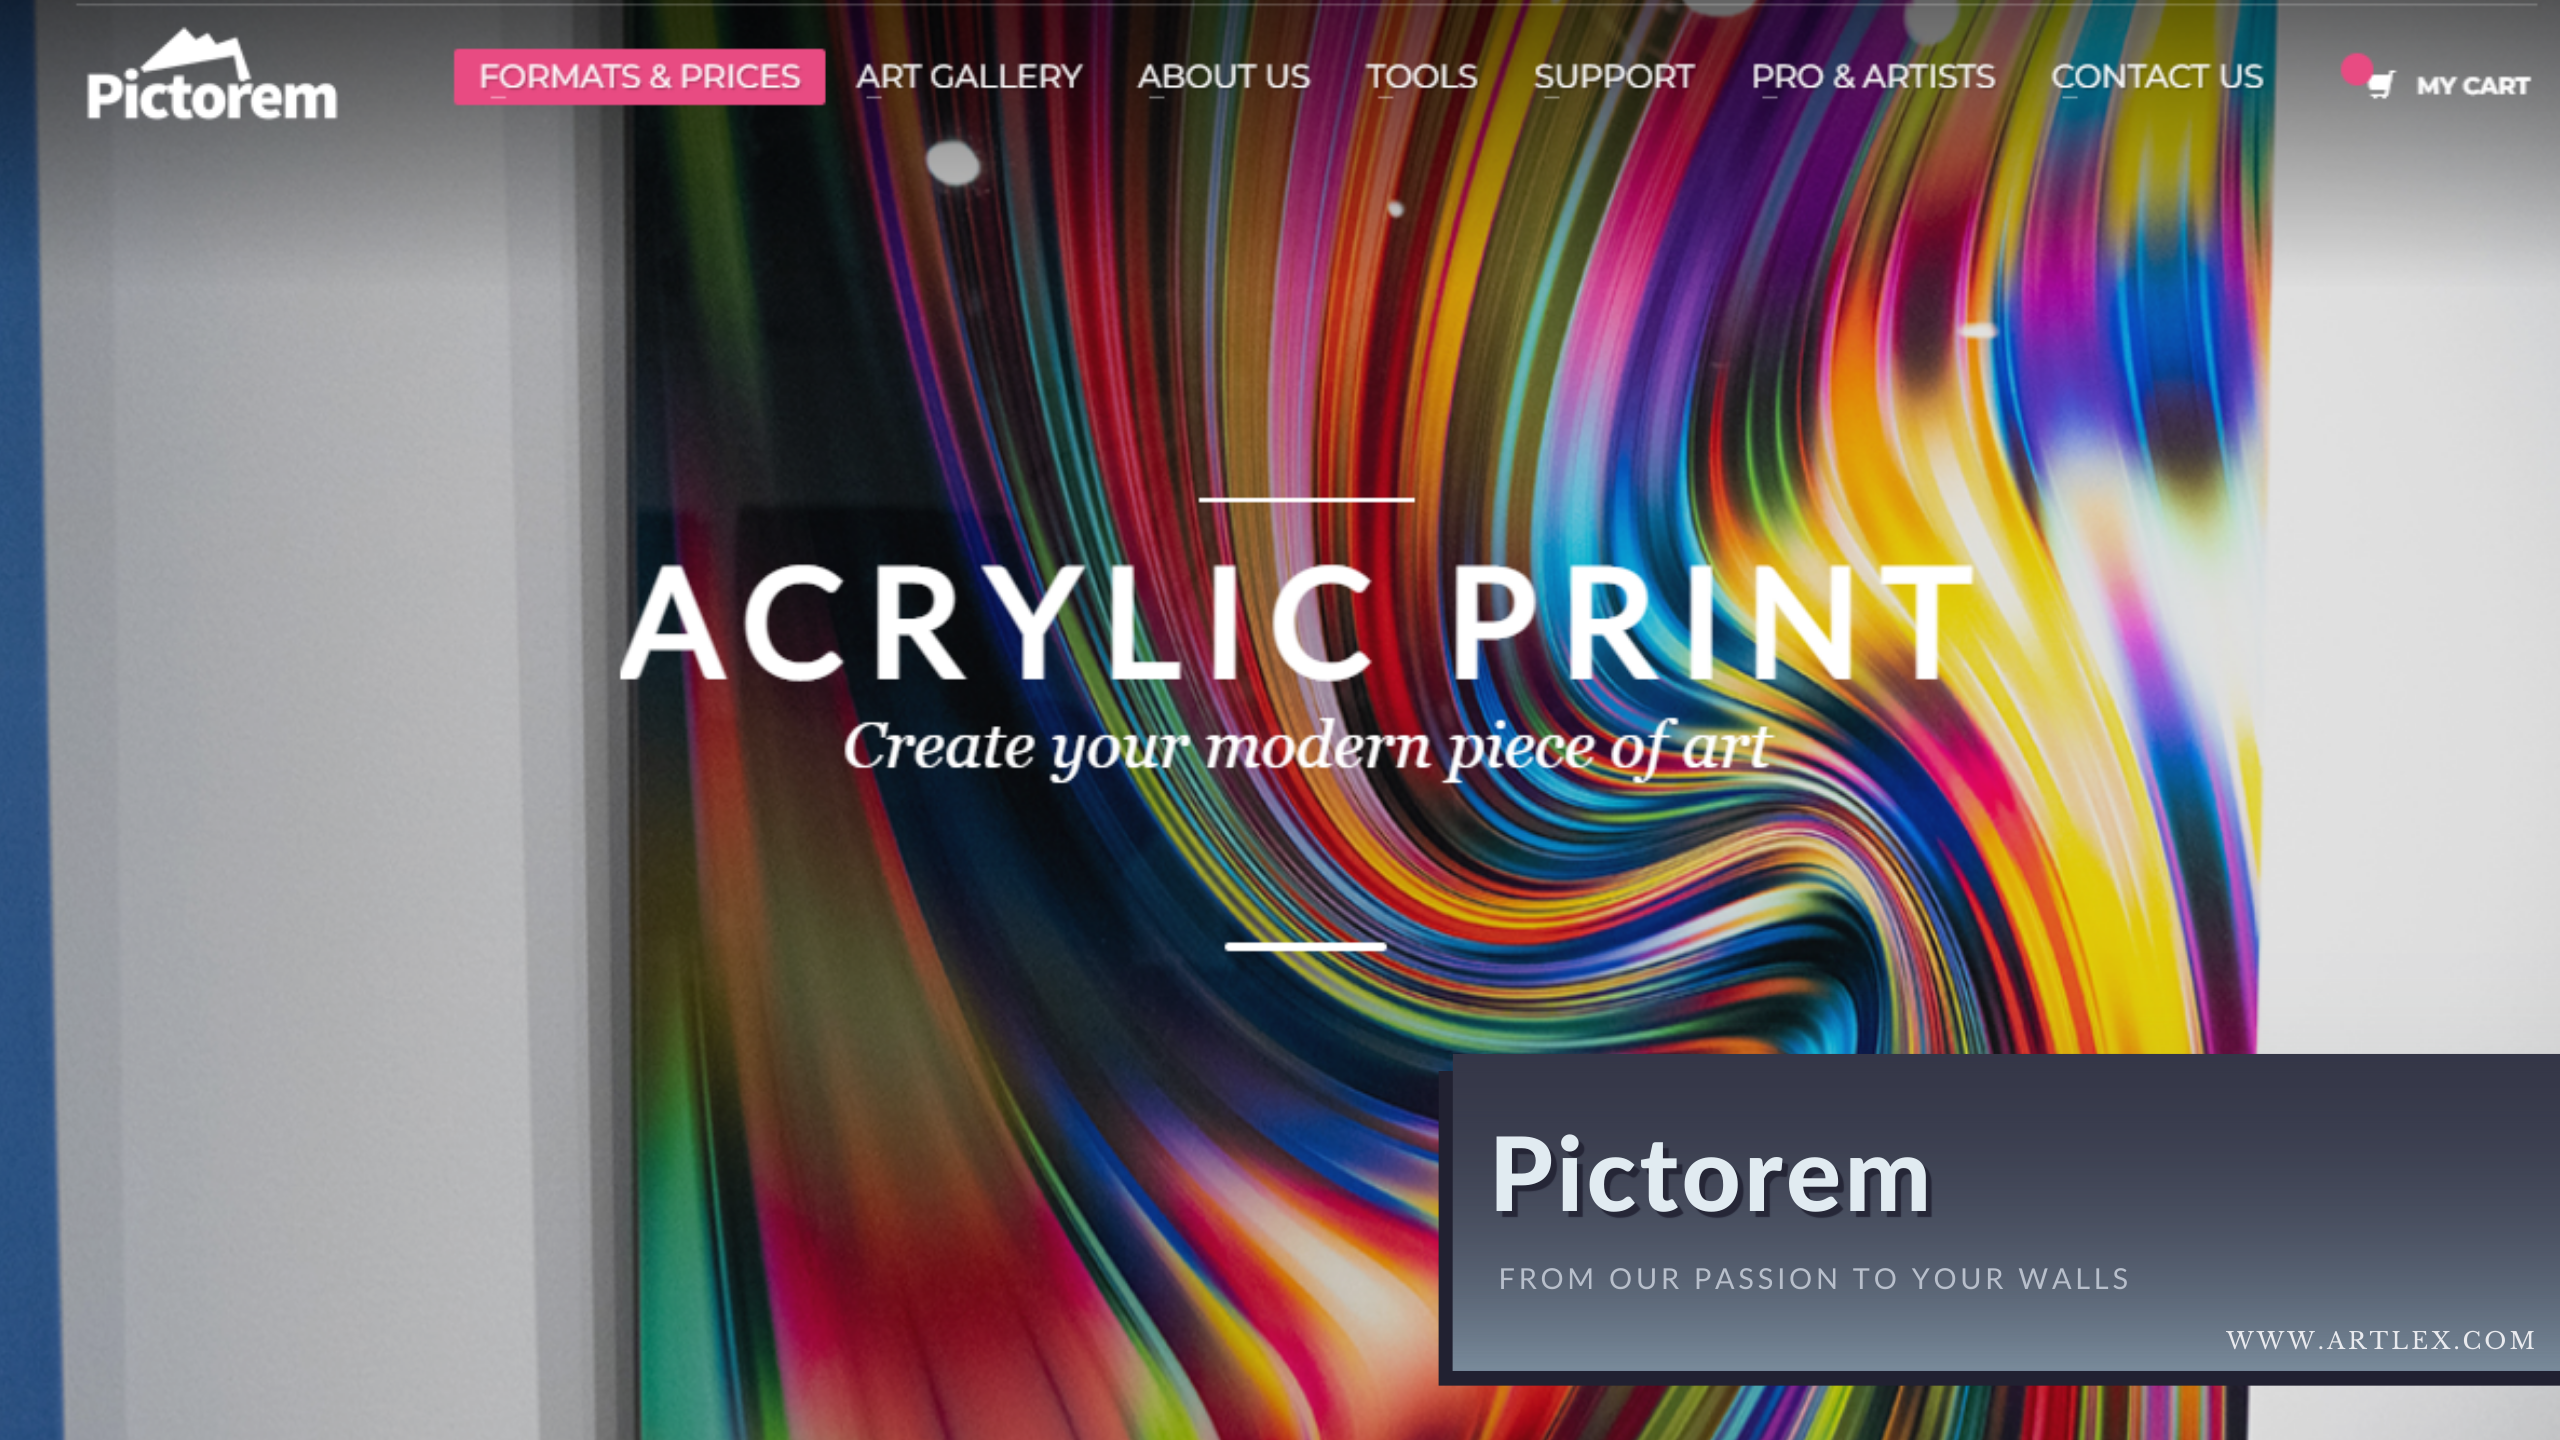 Pictorem Acrylic Prints